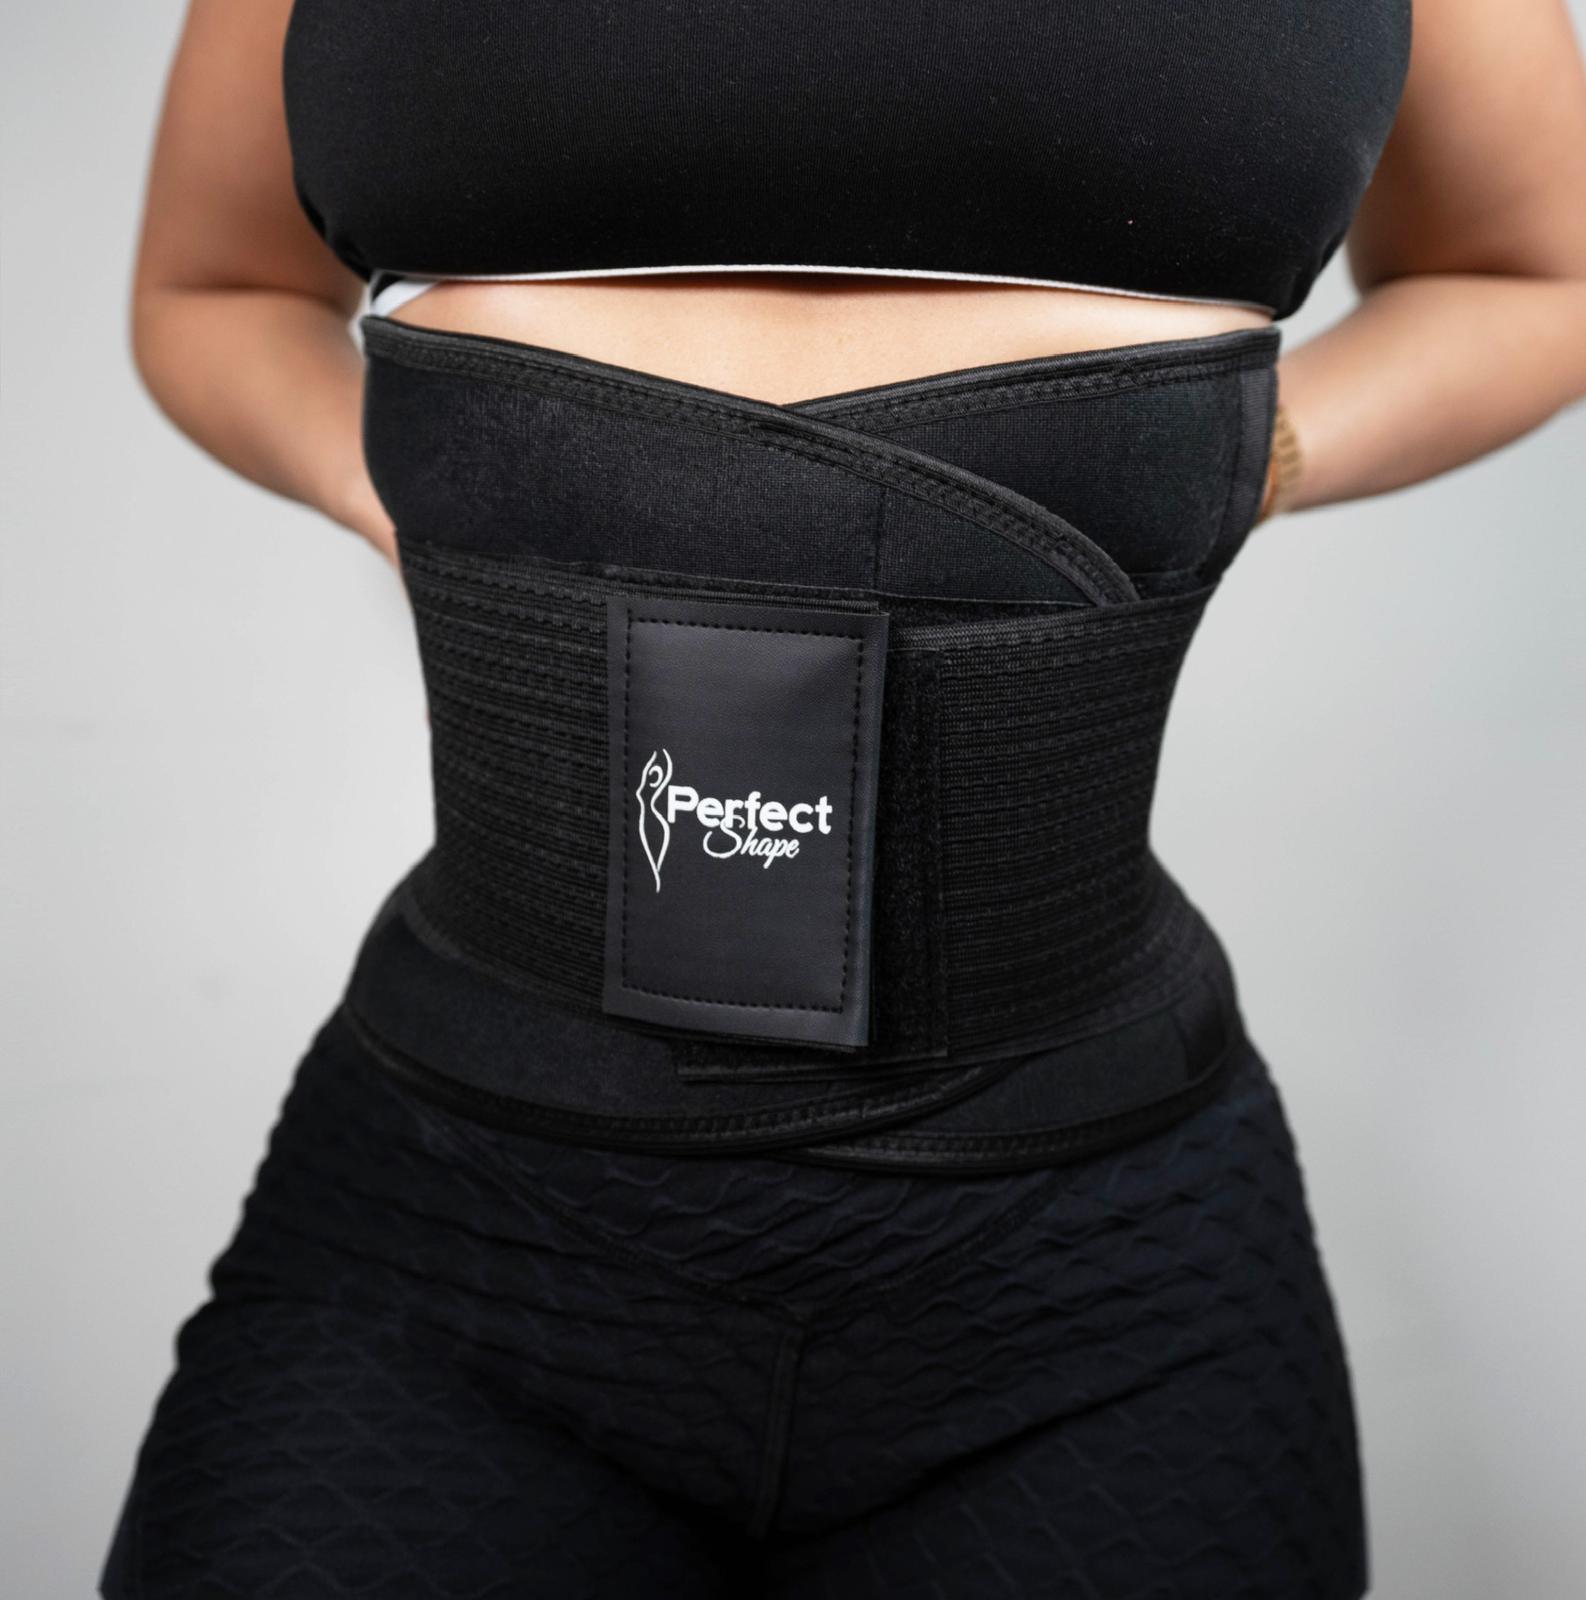 Body Shaper Polyester Sweet Sweat Slim Belt, For Gym, Waist Size